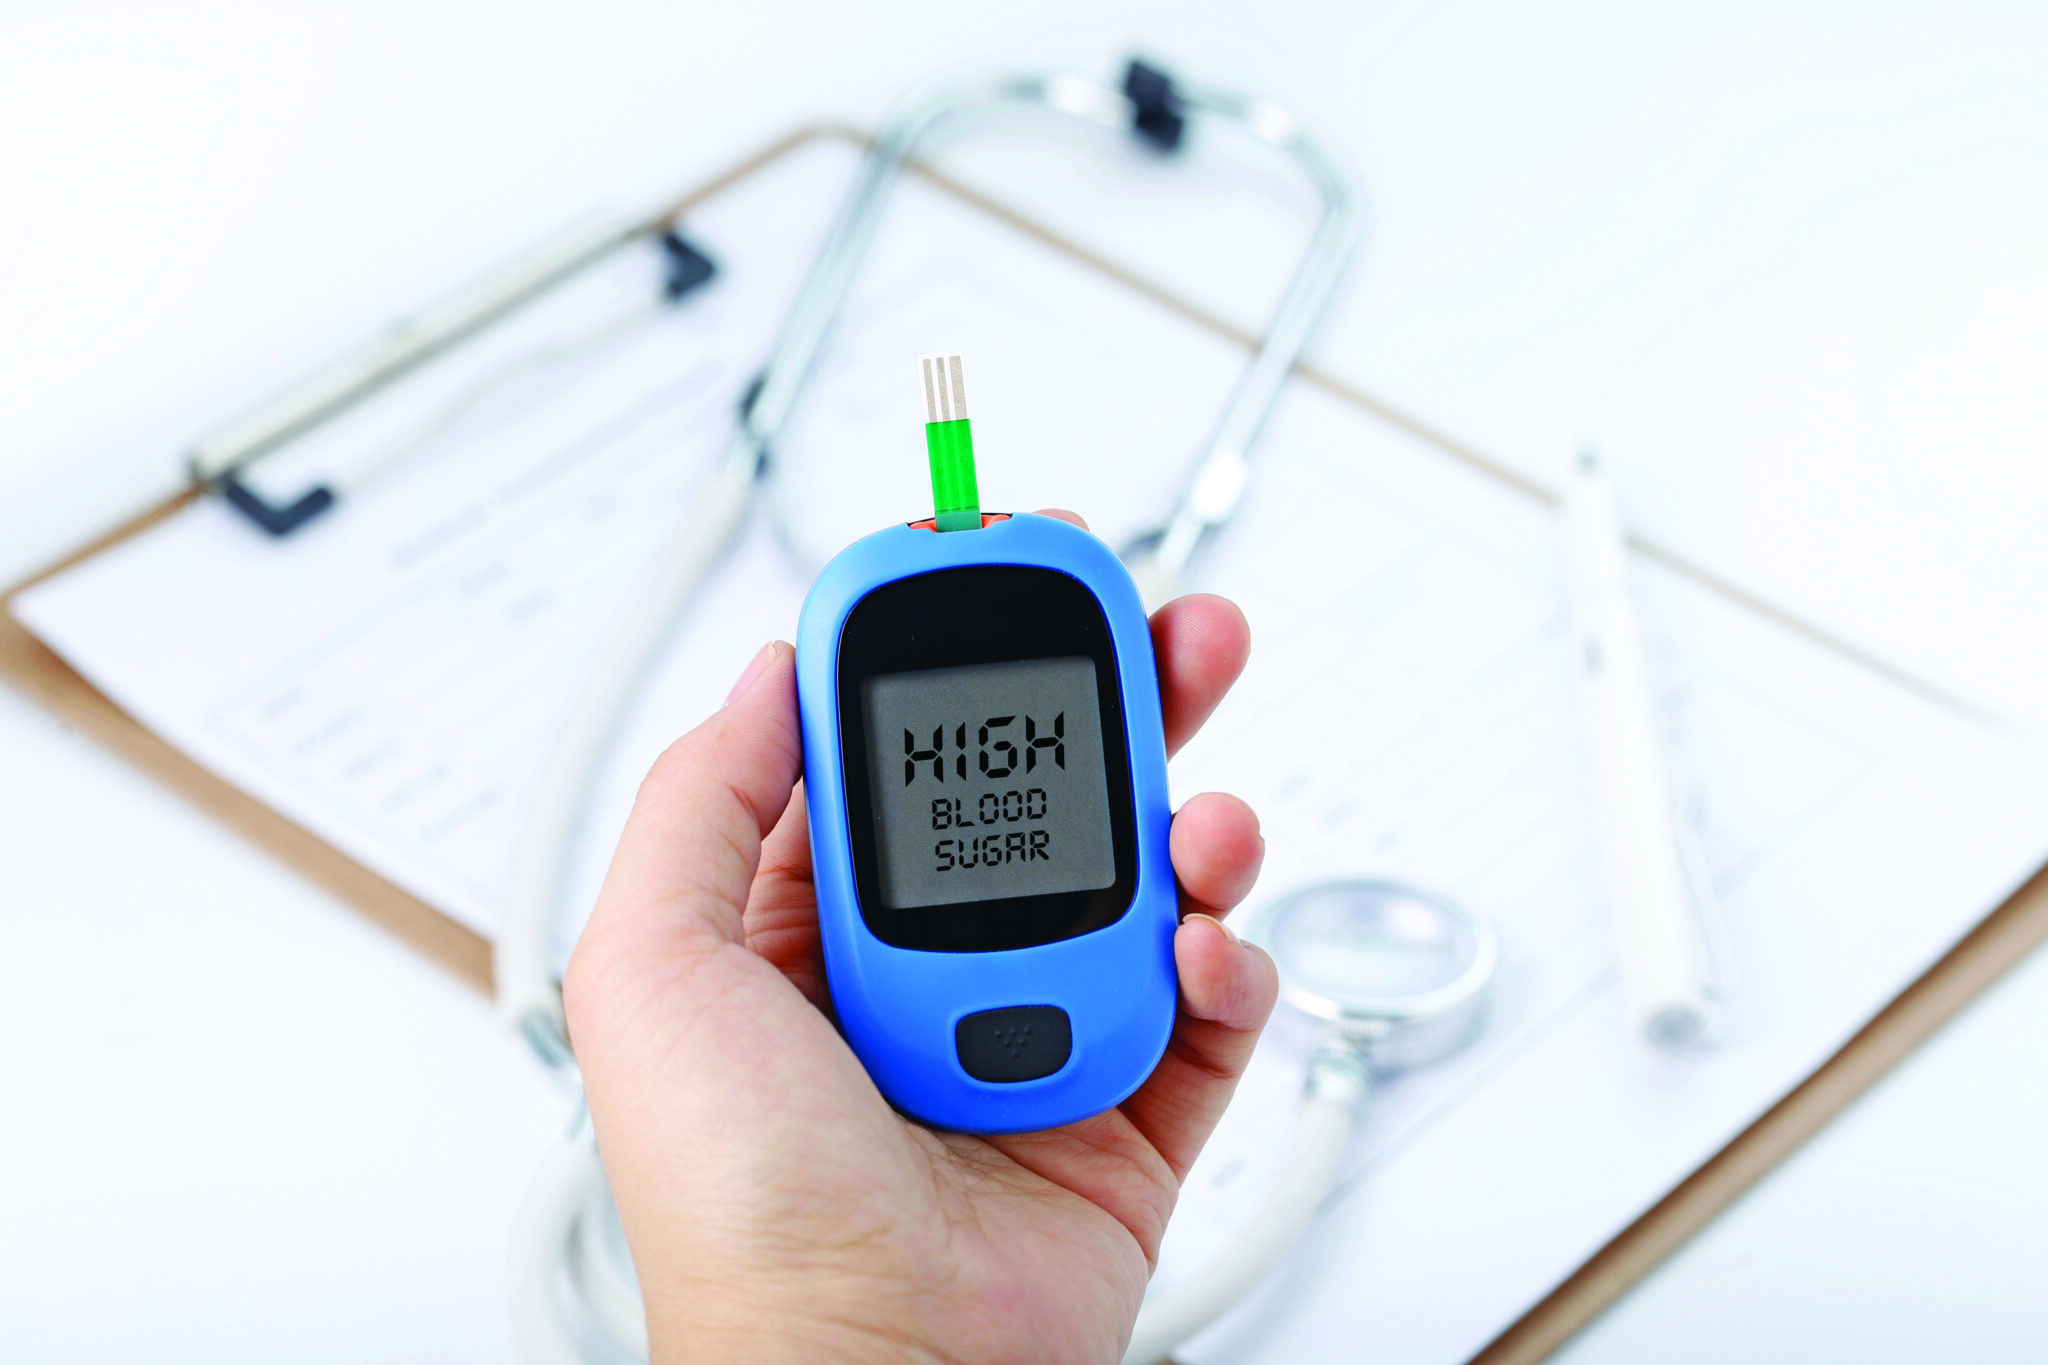 Hand holding a blood glucose meter measuring blood sugar.